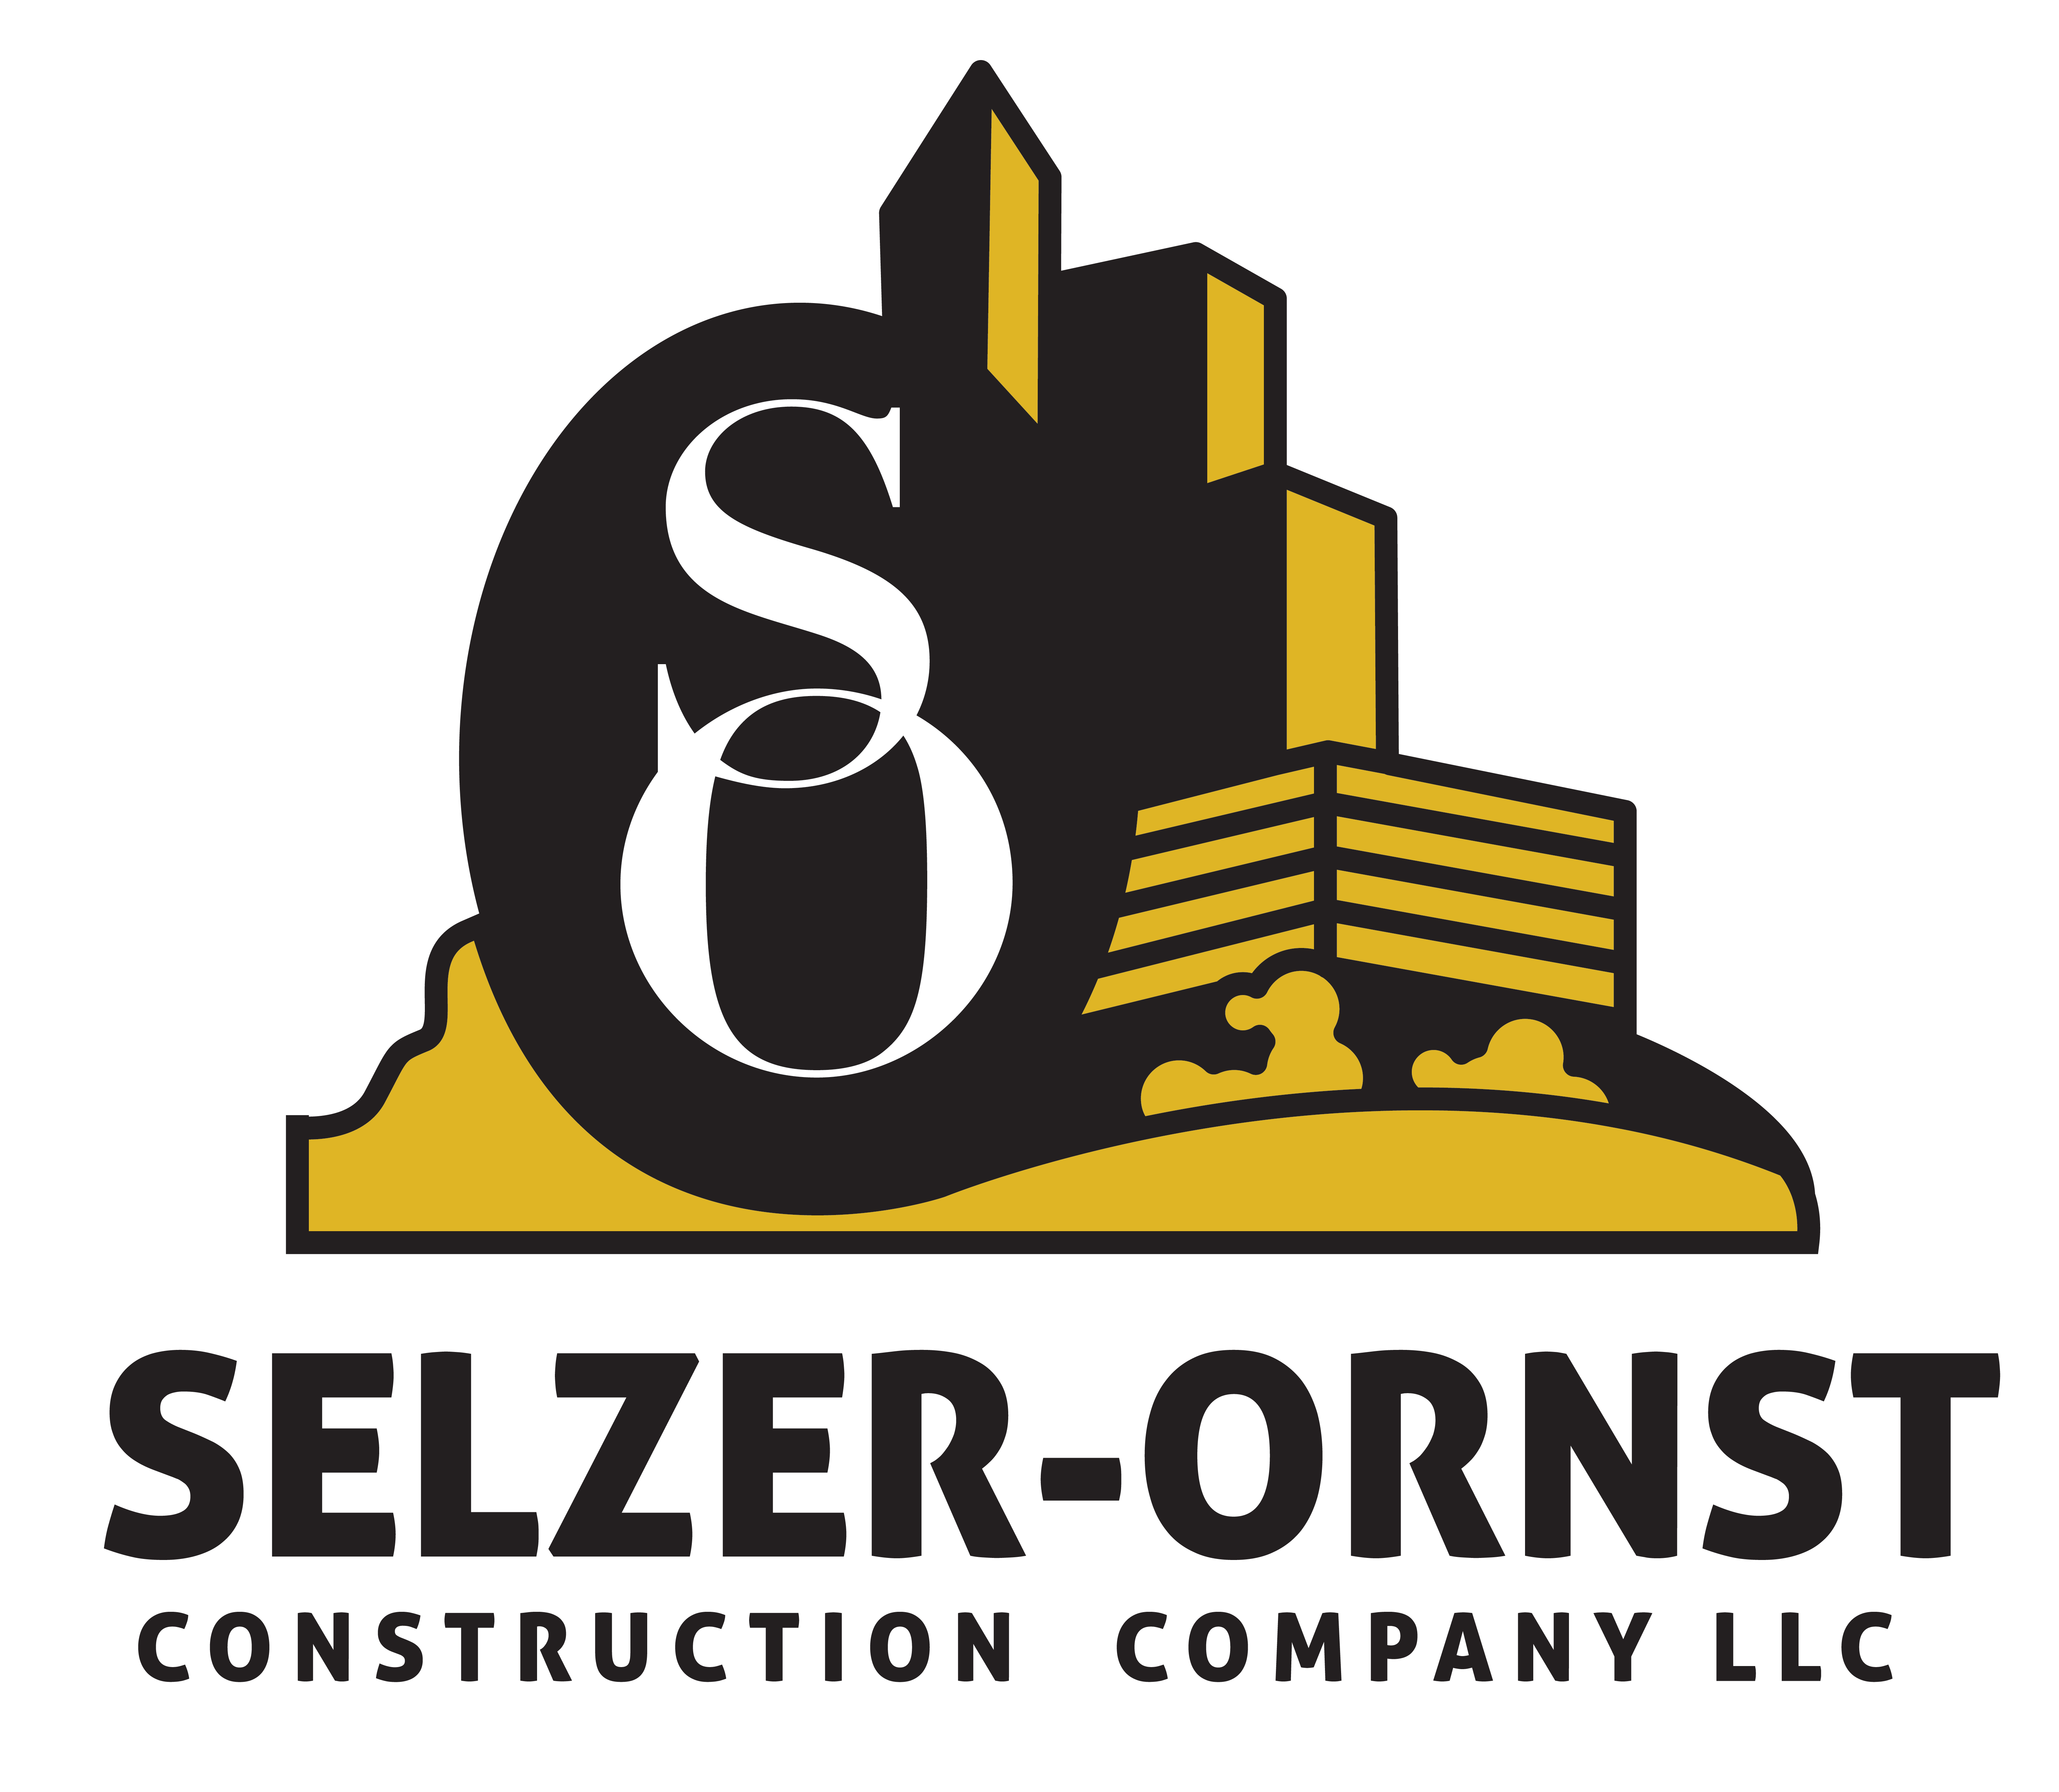 Selzer-Ornst Construction Company